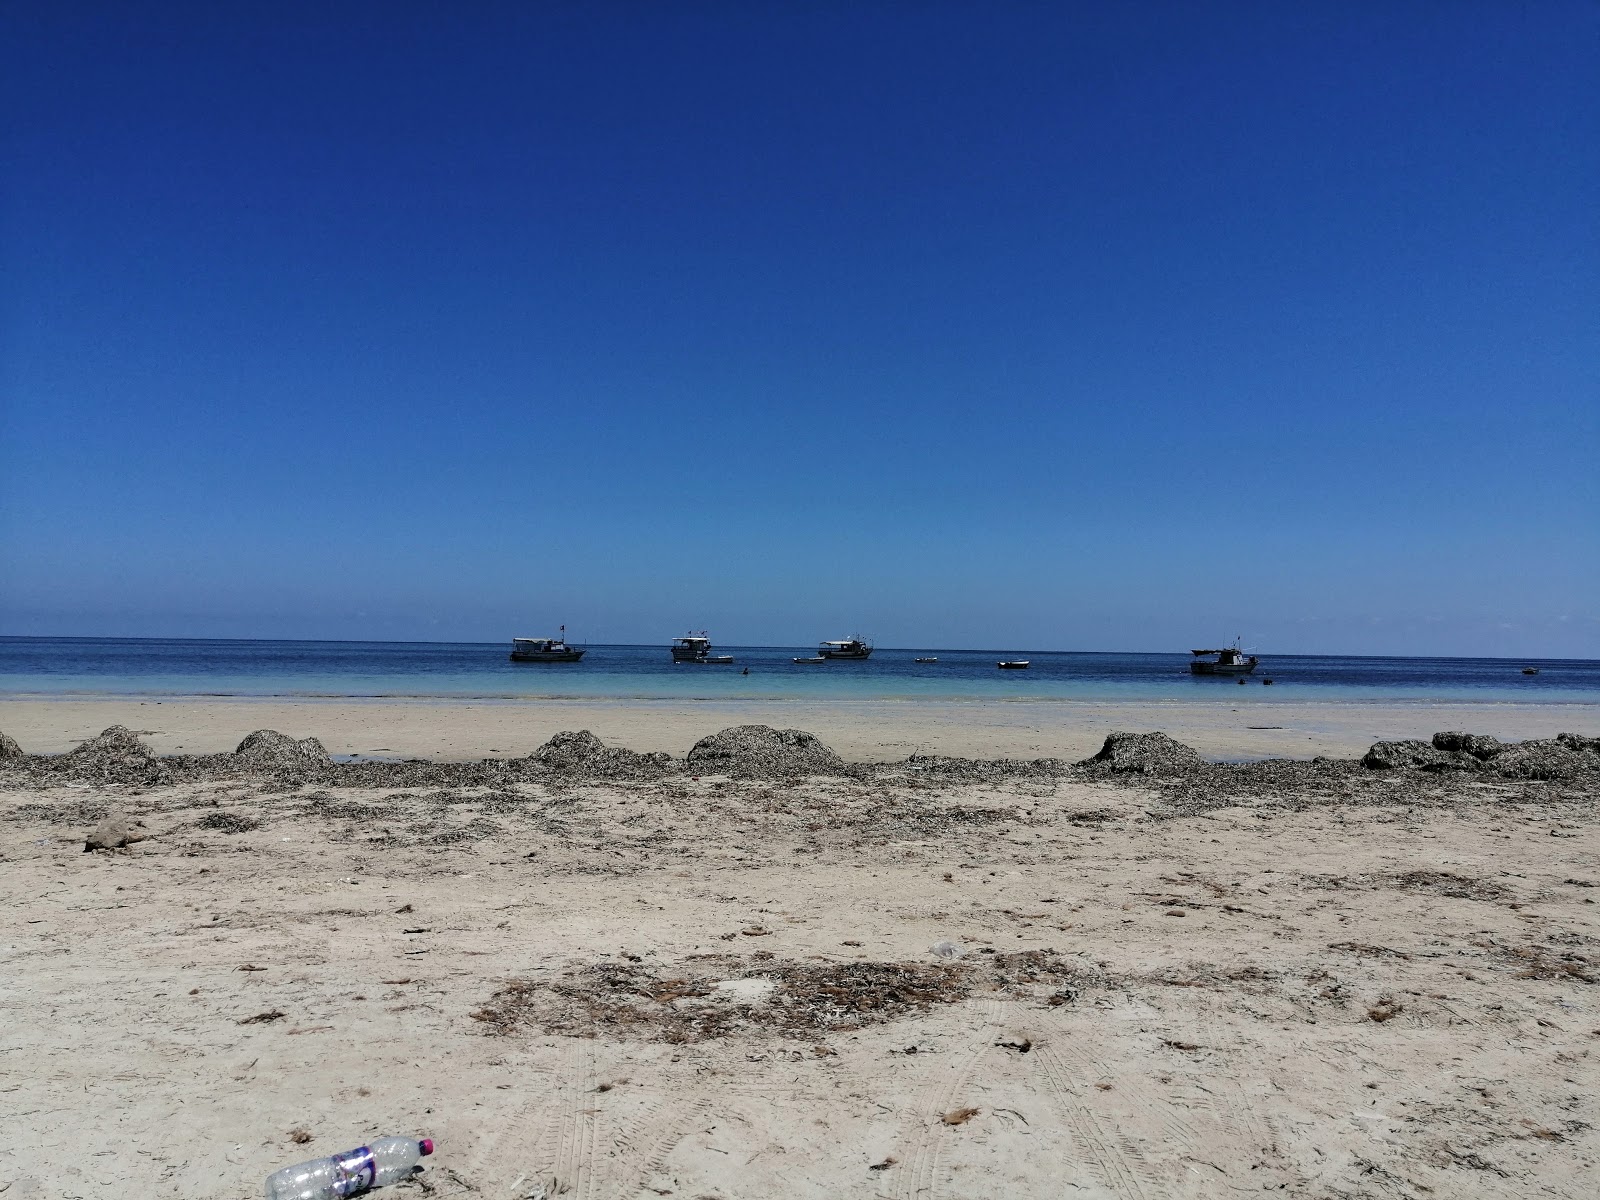 Foto di Aqla beach con una superficie del sabbia bianca